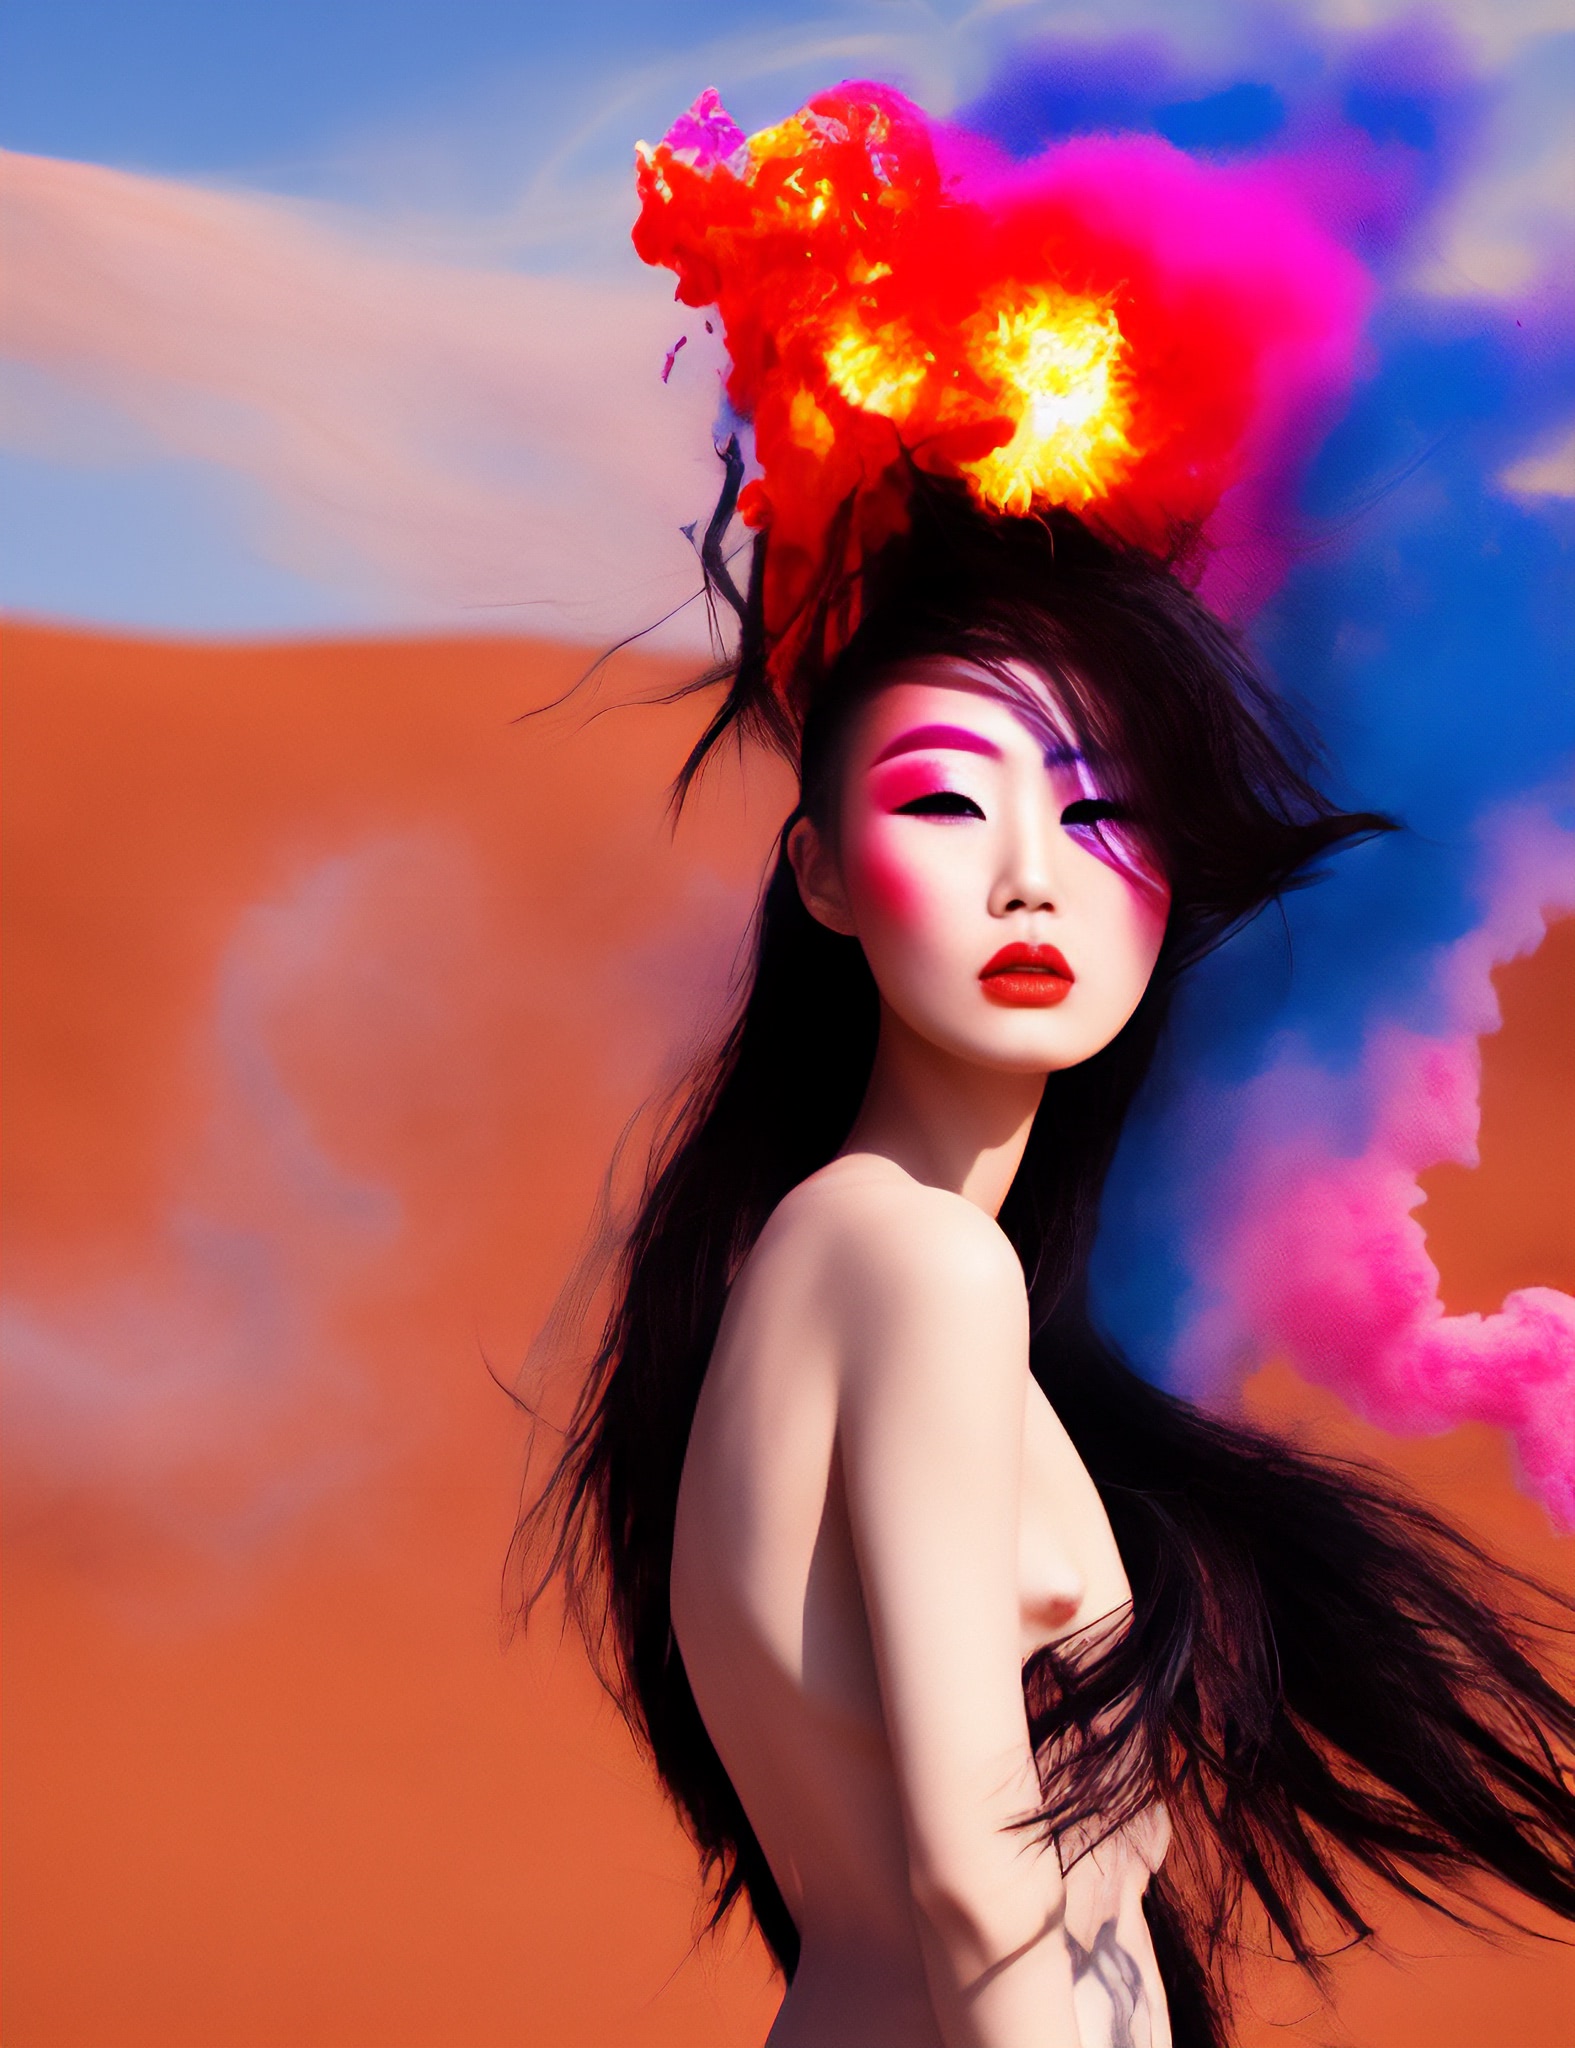 model-colorful-smoke-fire-desert-1